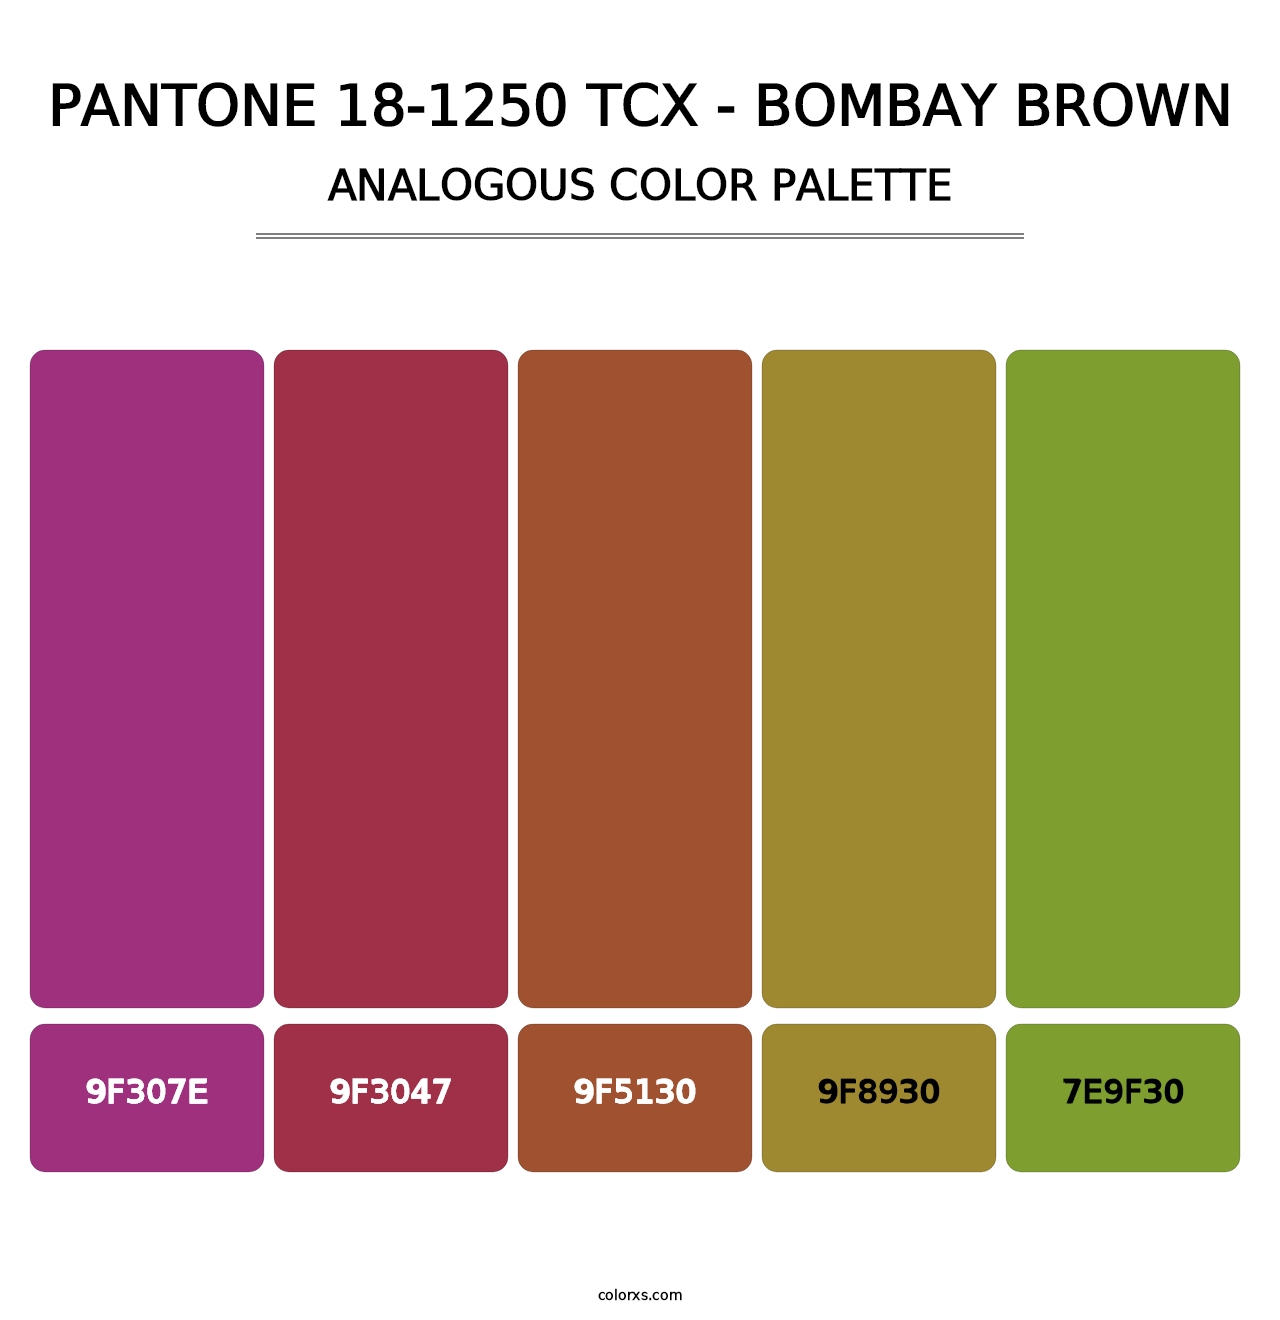 PANTONE 18-1250 TCX - Bombay Brown - Analogous Color Palette